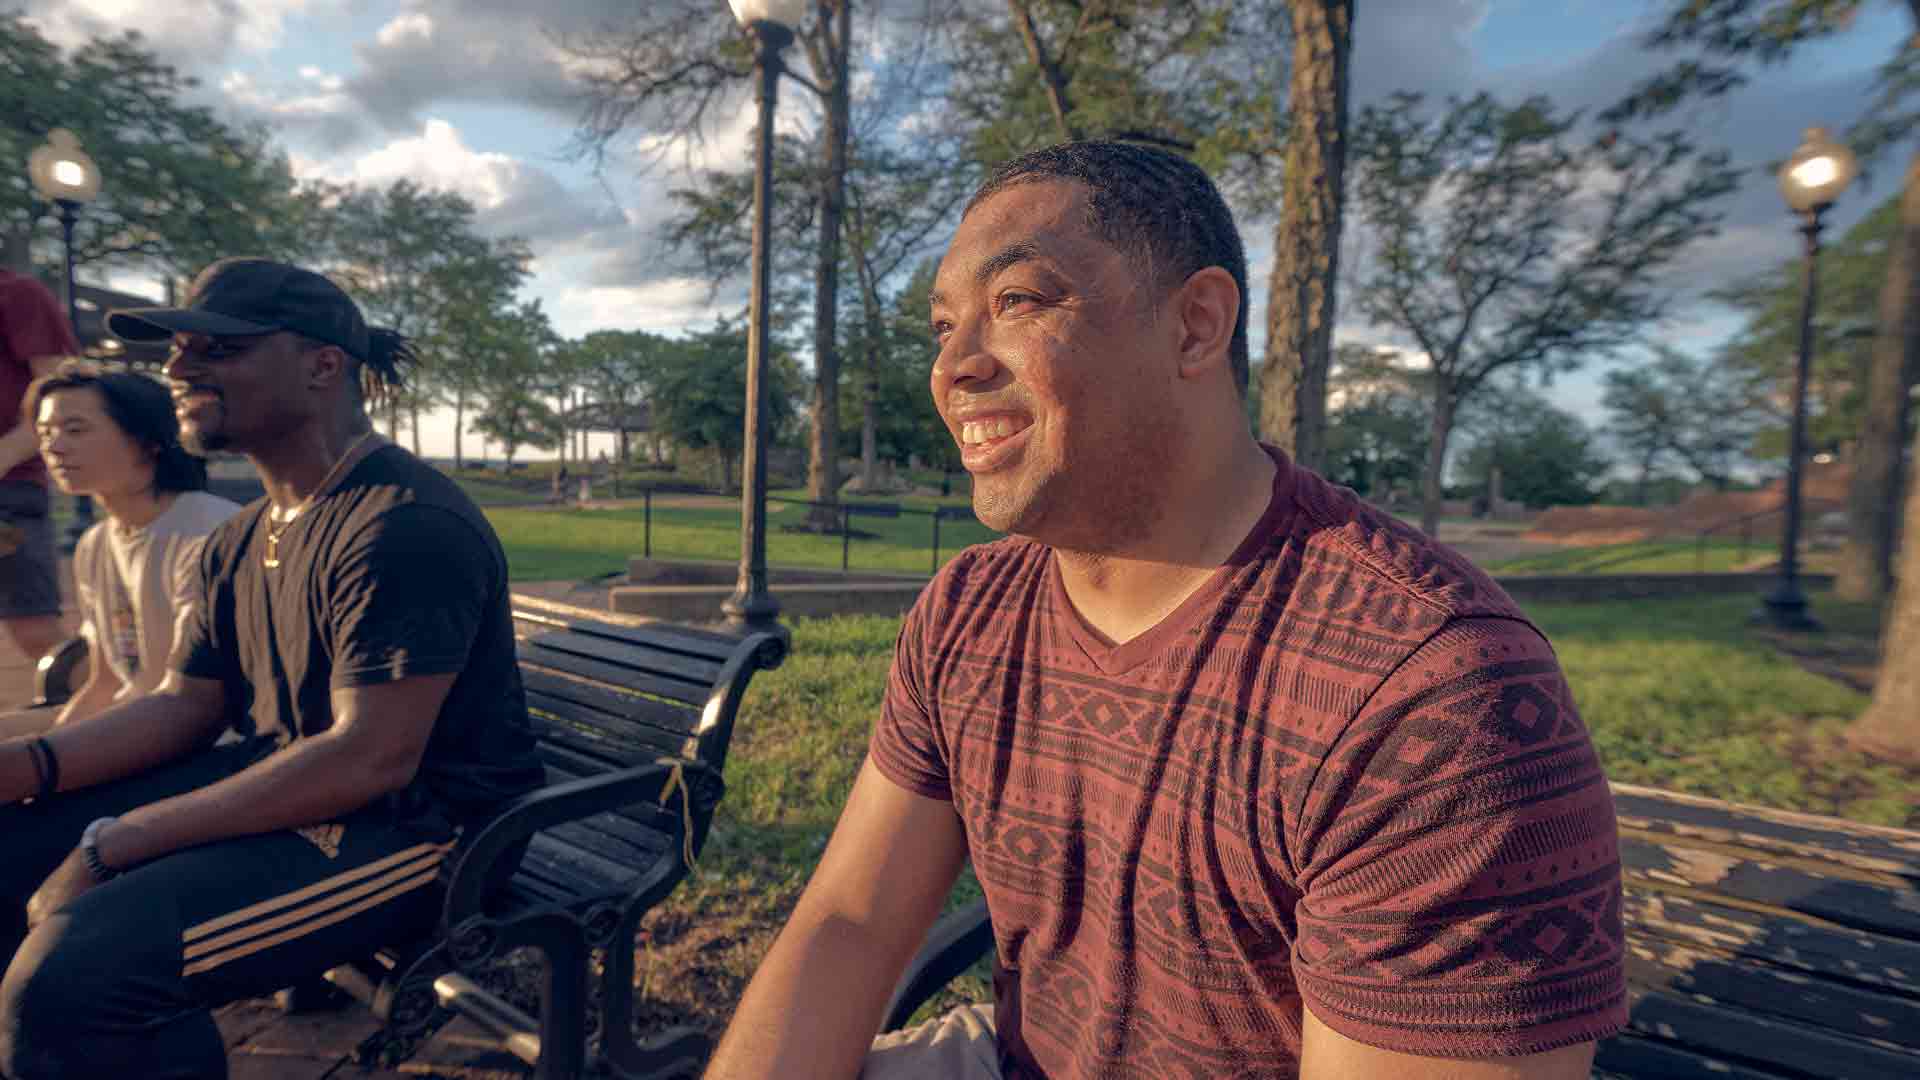 Dominique Velazquez, U.S. Navy Hospital Corpsman, smiles during quality time with friends at a sunlit park